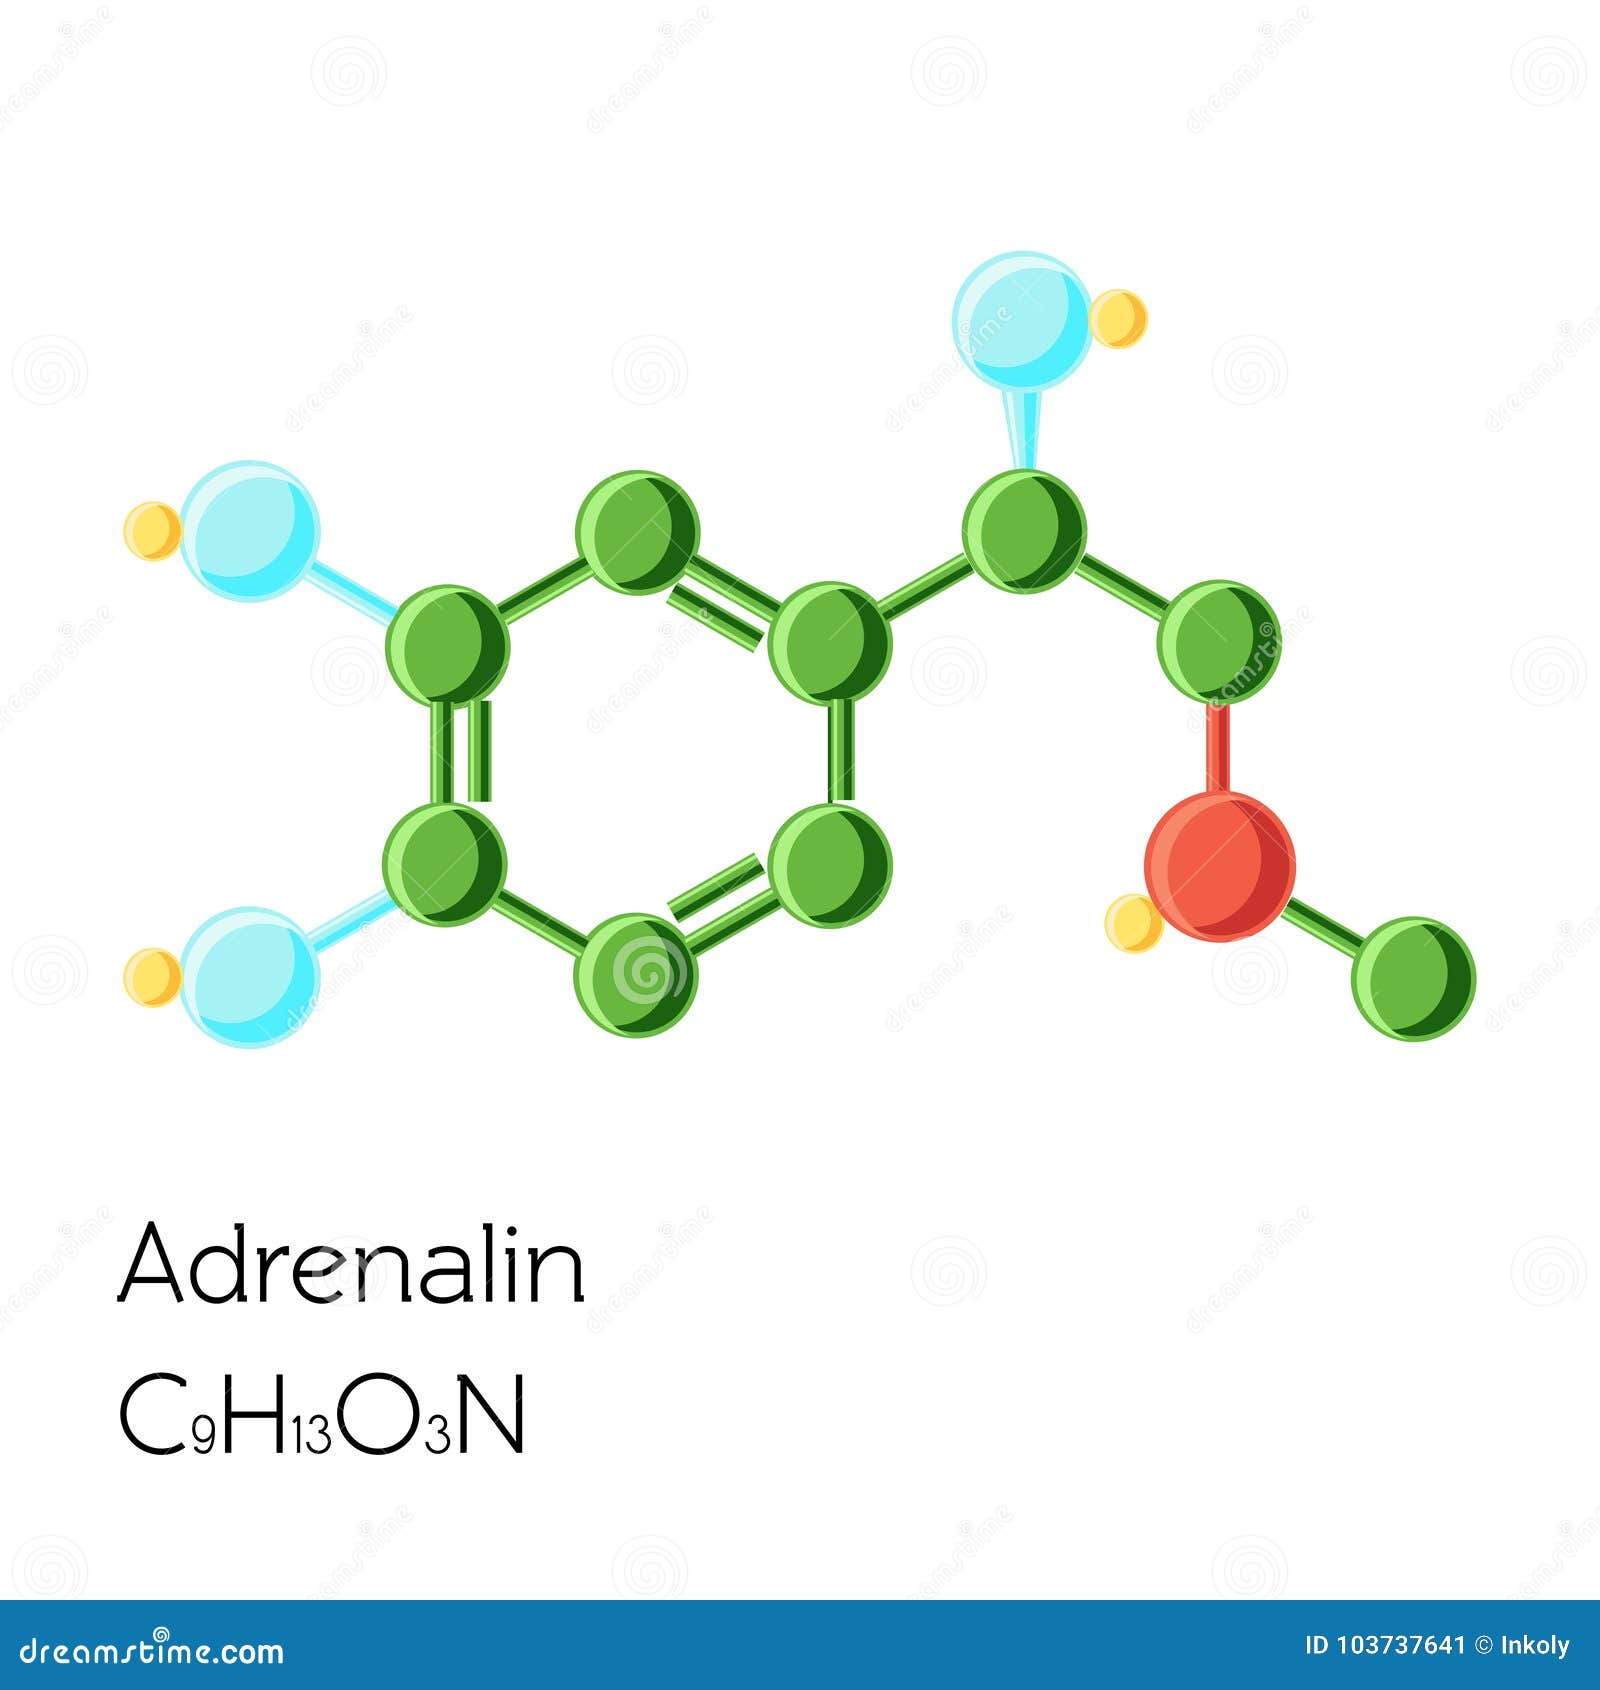 adrenalin, adrenaline, epinephrine hormone structural chemical formula  on white background.